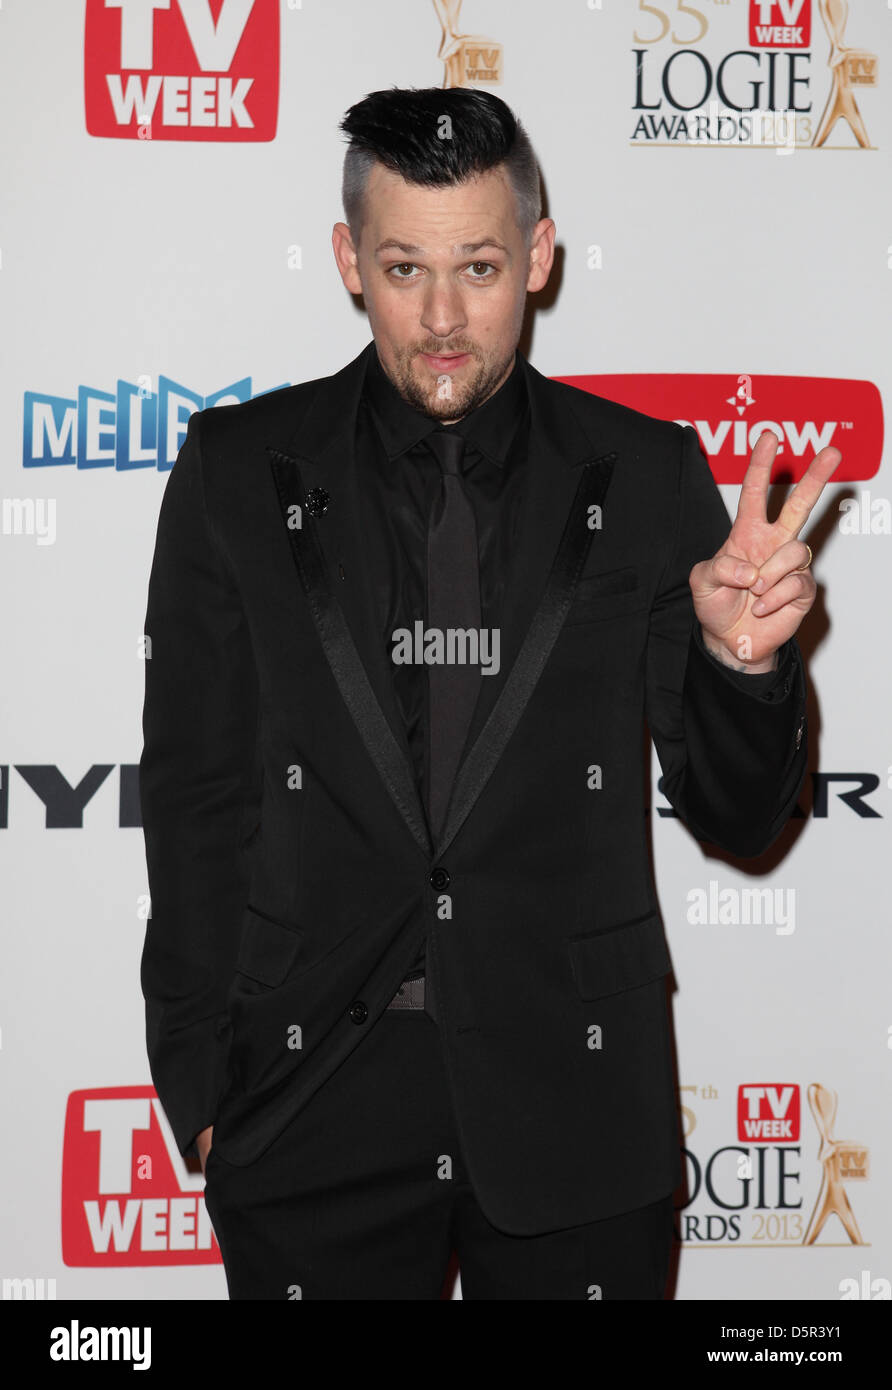 Joel Madden at the 2013 Logie Awards, Melbourne April 7, 2013. Stock Photo